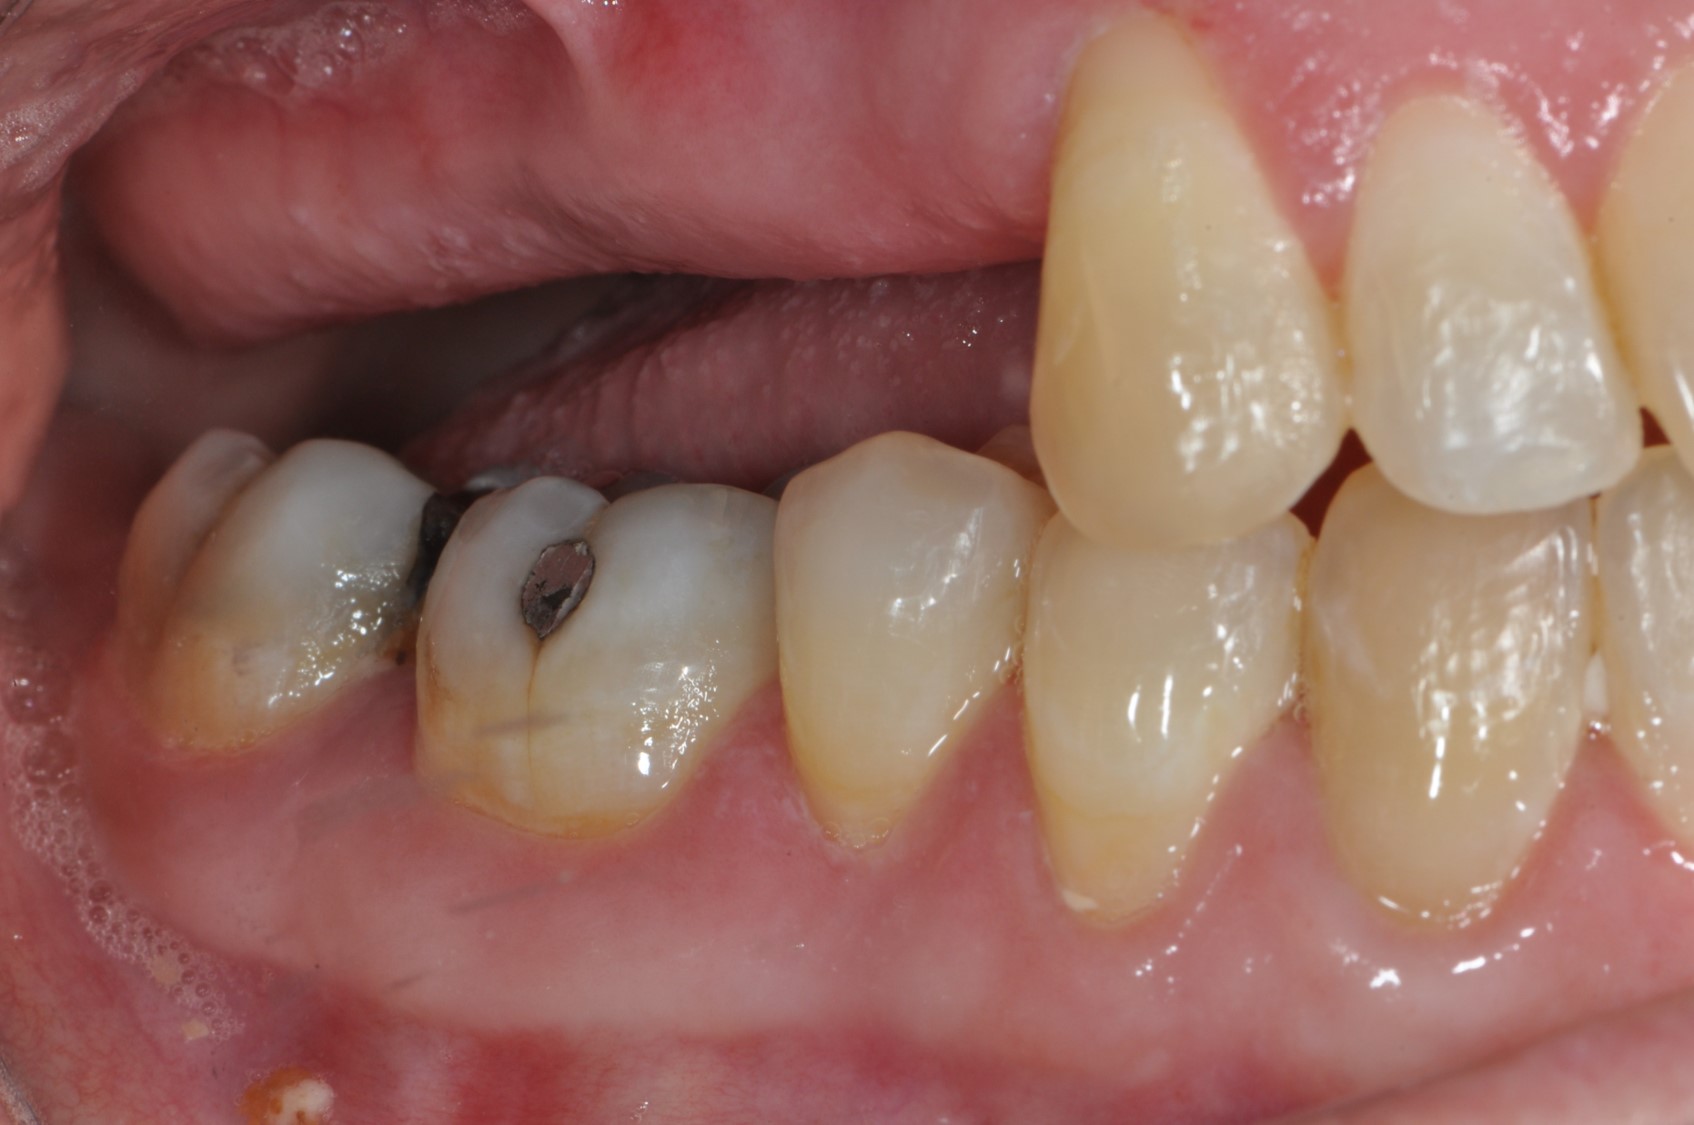 Case 2 - Multiple Missing Teeth